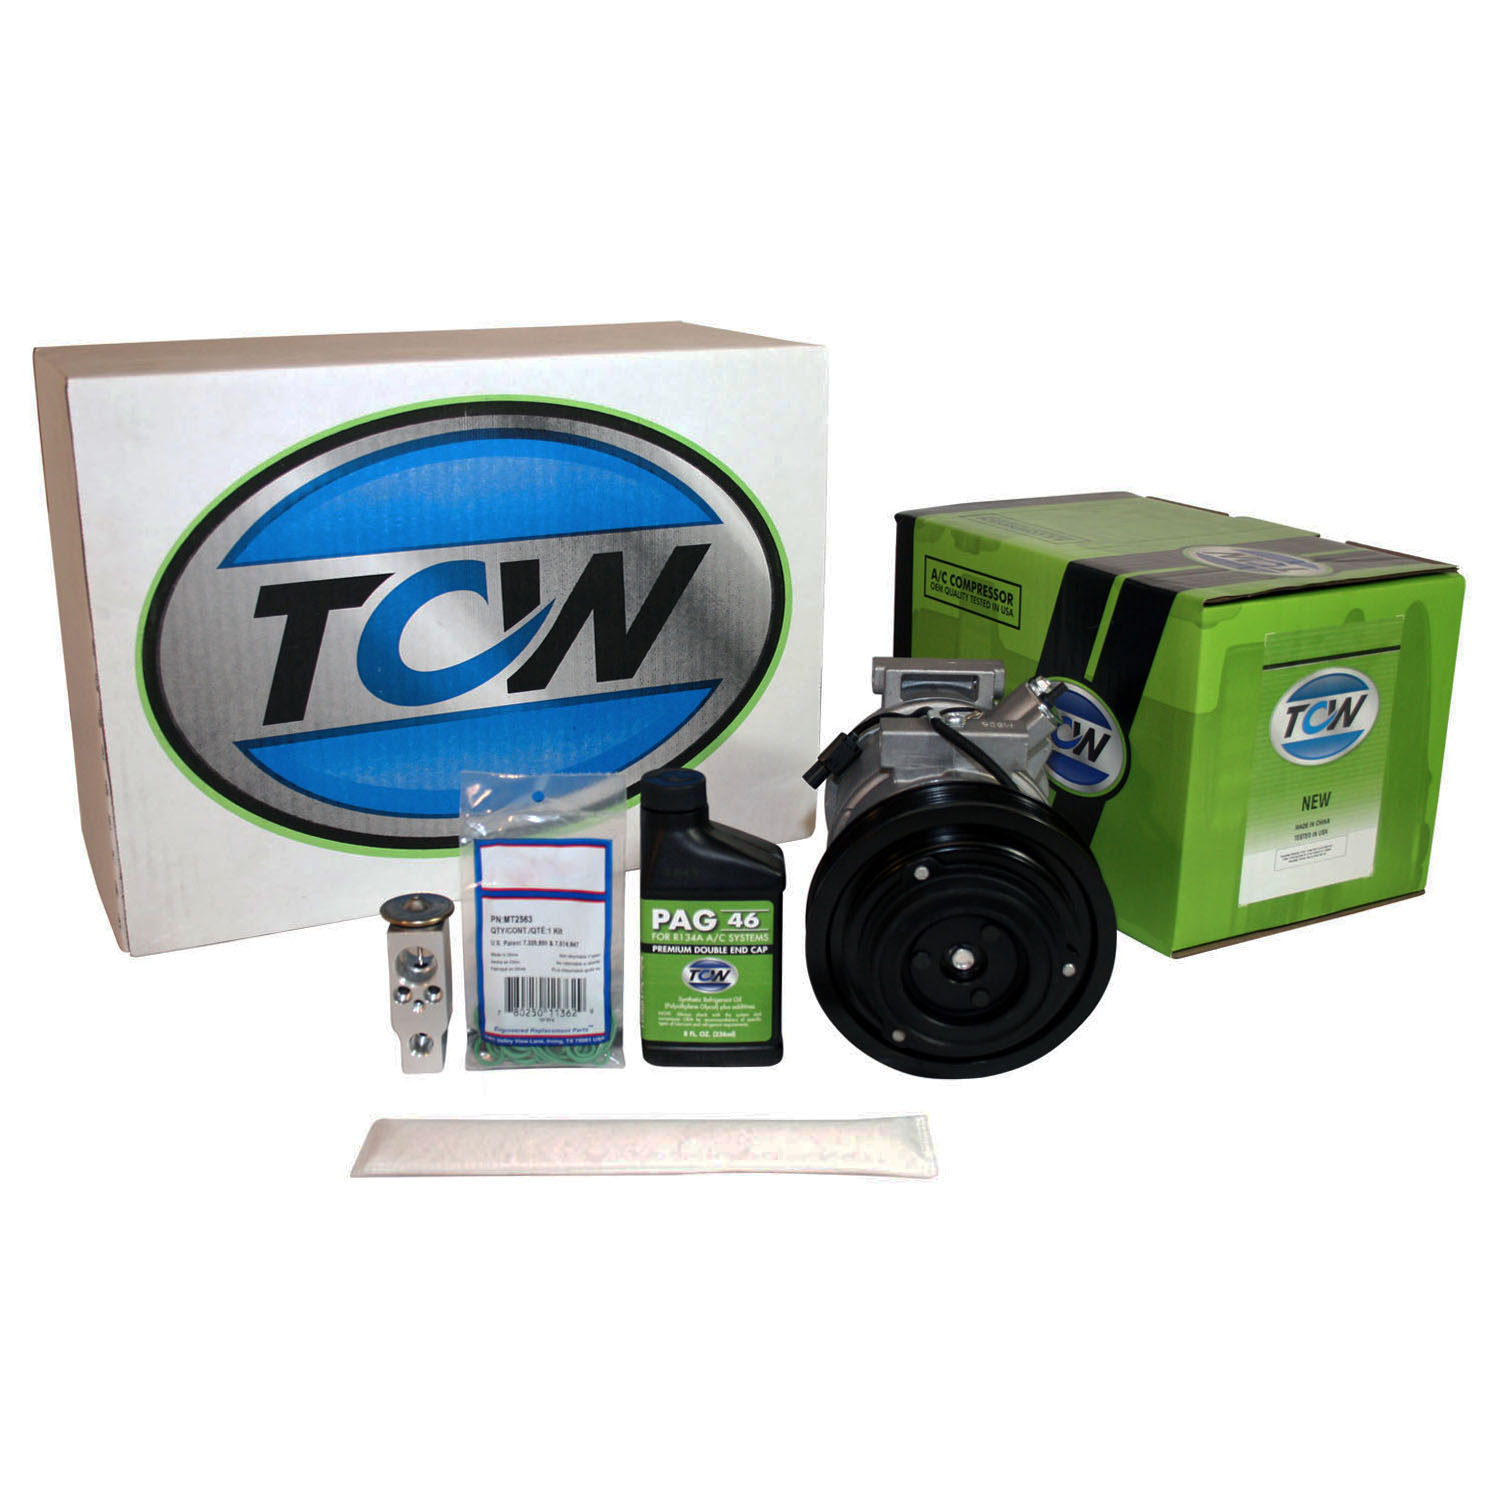 TCW Vehicle A/C Kit K1000403N New Product Image field_60b6a13a6e67c